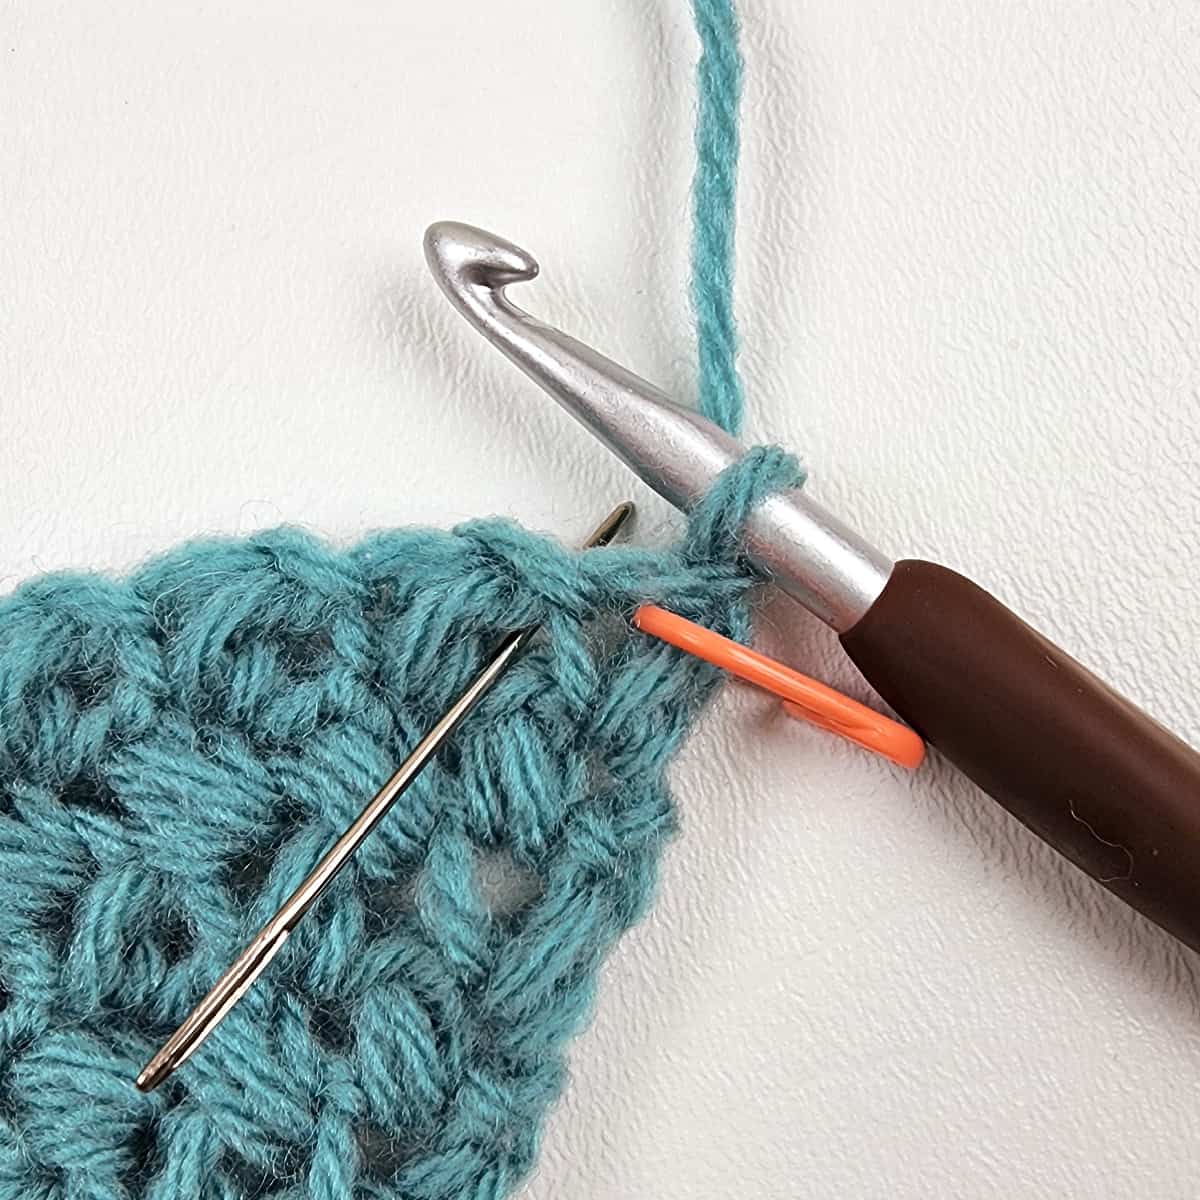 Small swatch of c2c mini bean stitch, brown crochet hook, orange stitch marker and yarn needle.